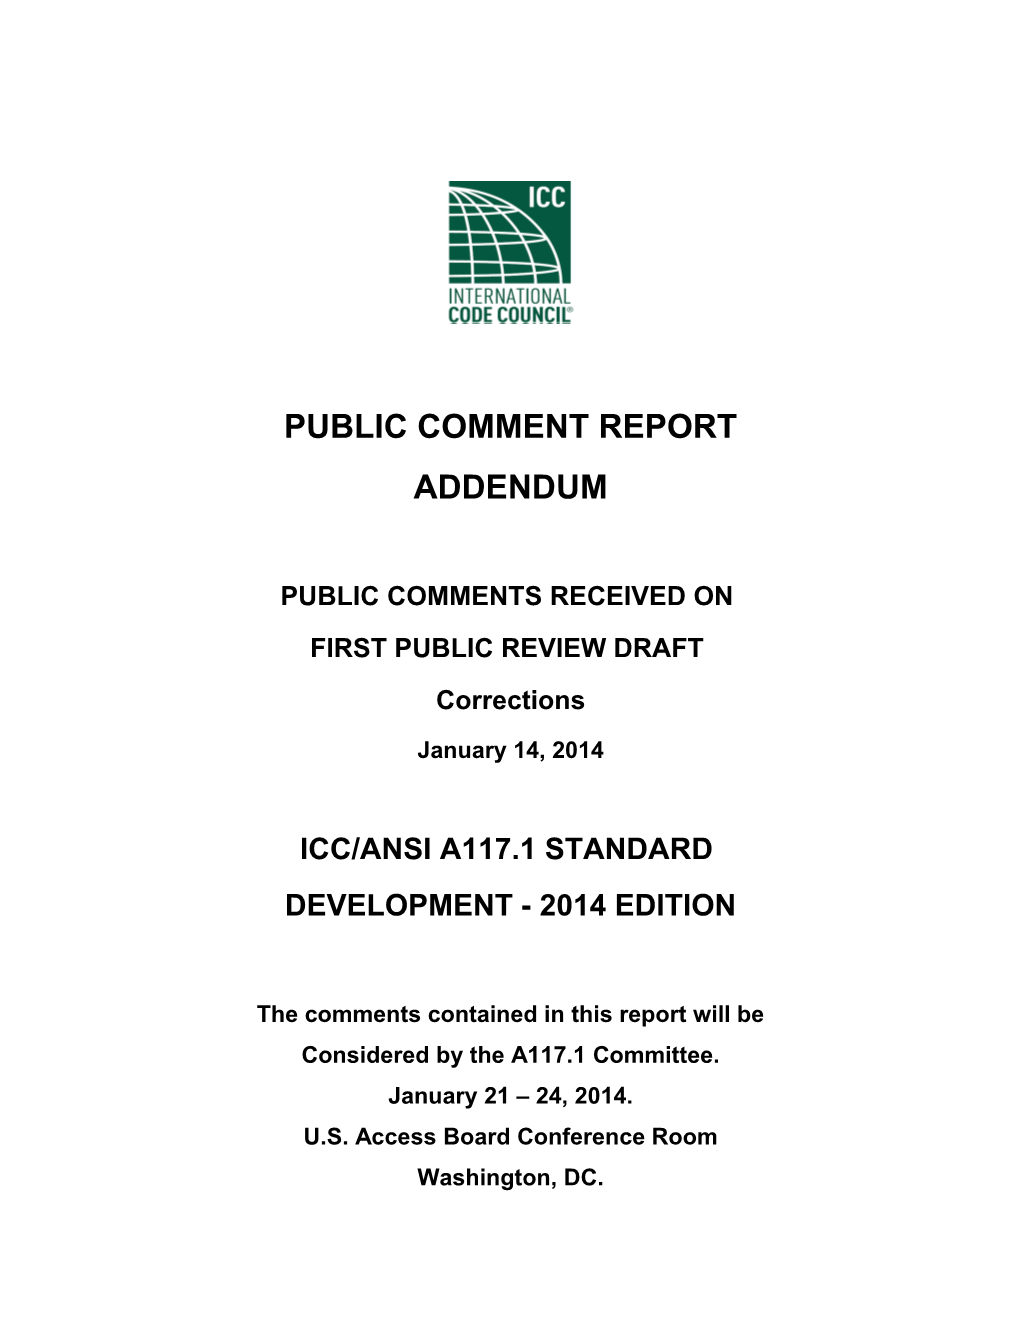 January 14 Public Comment Report Addendum